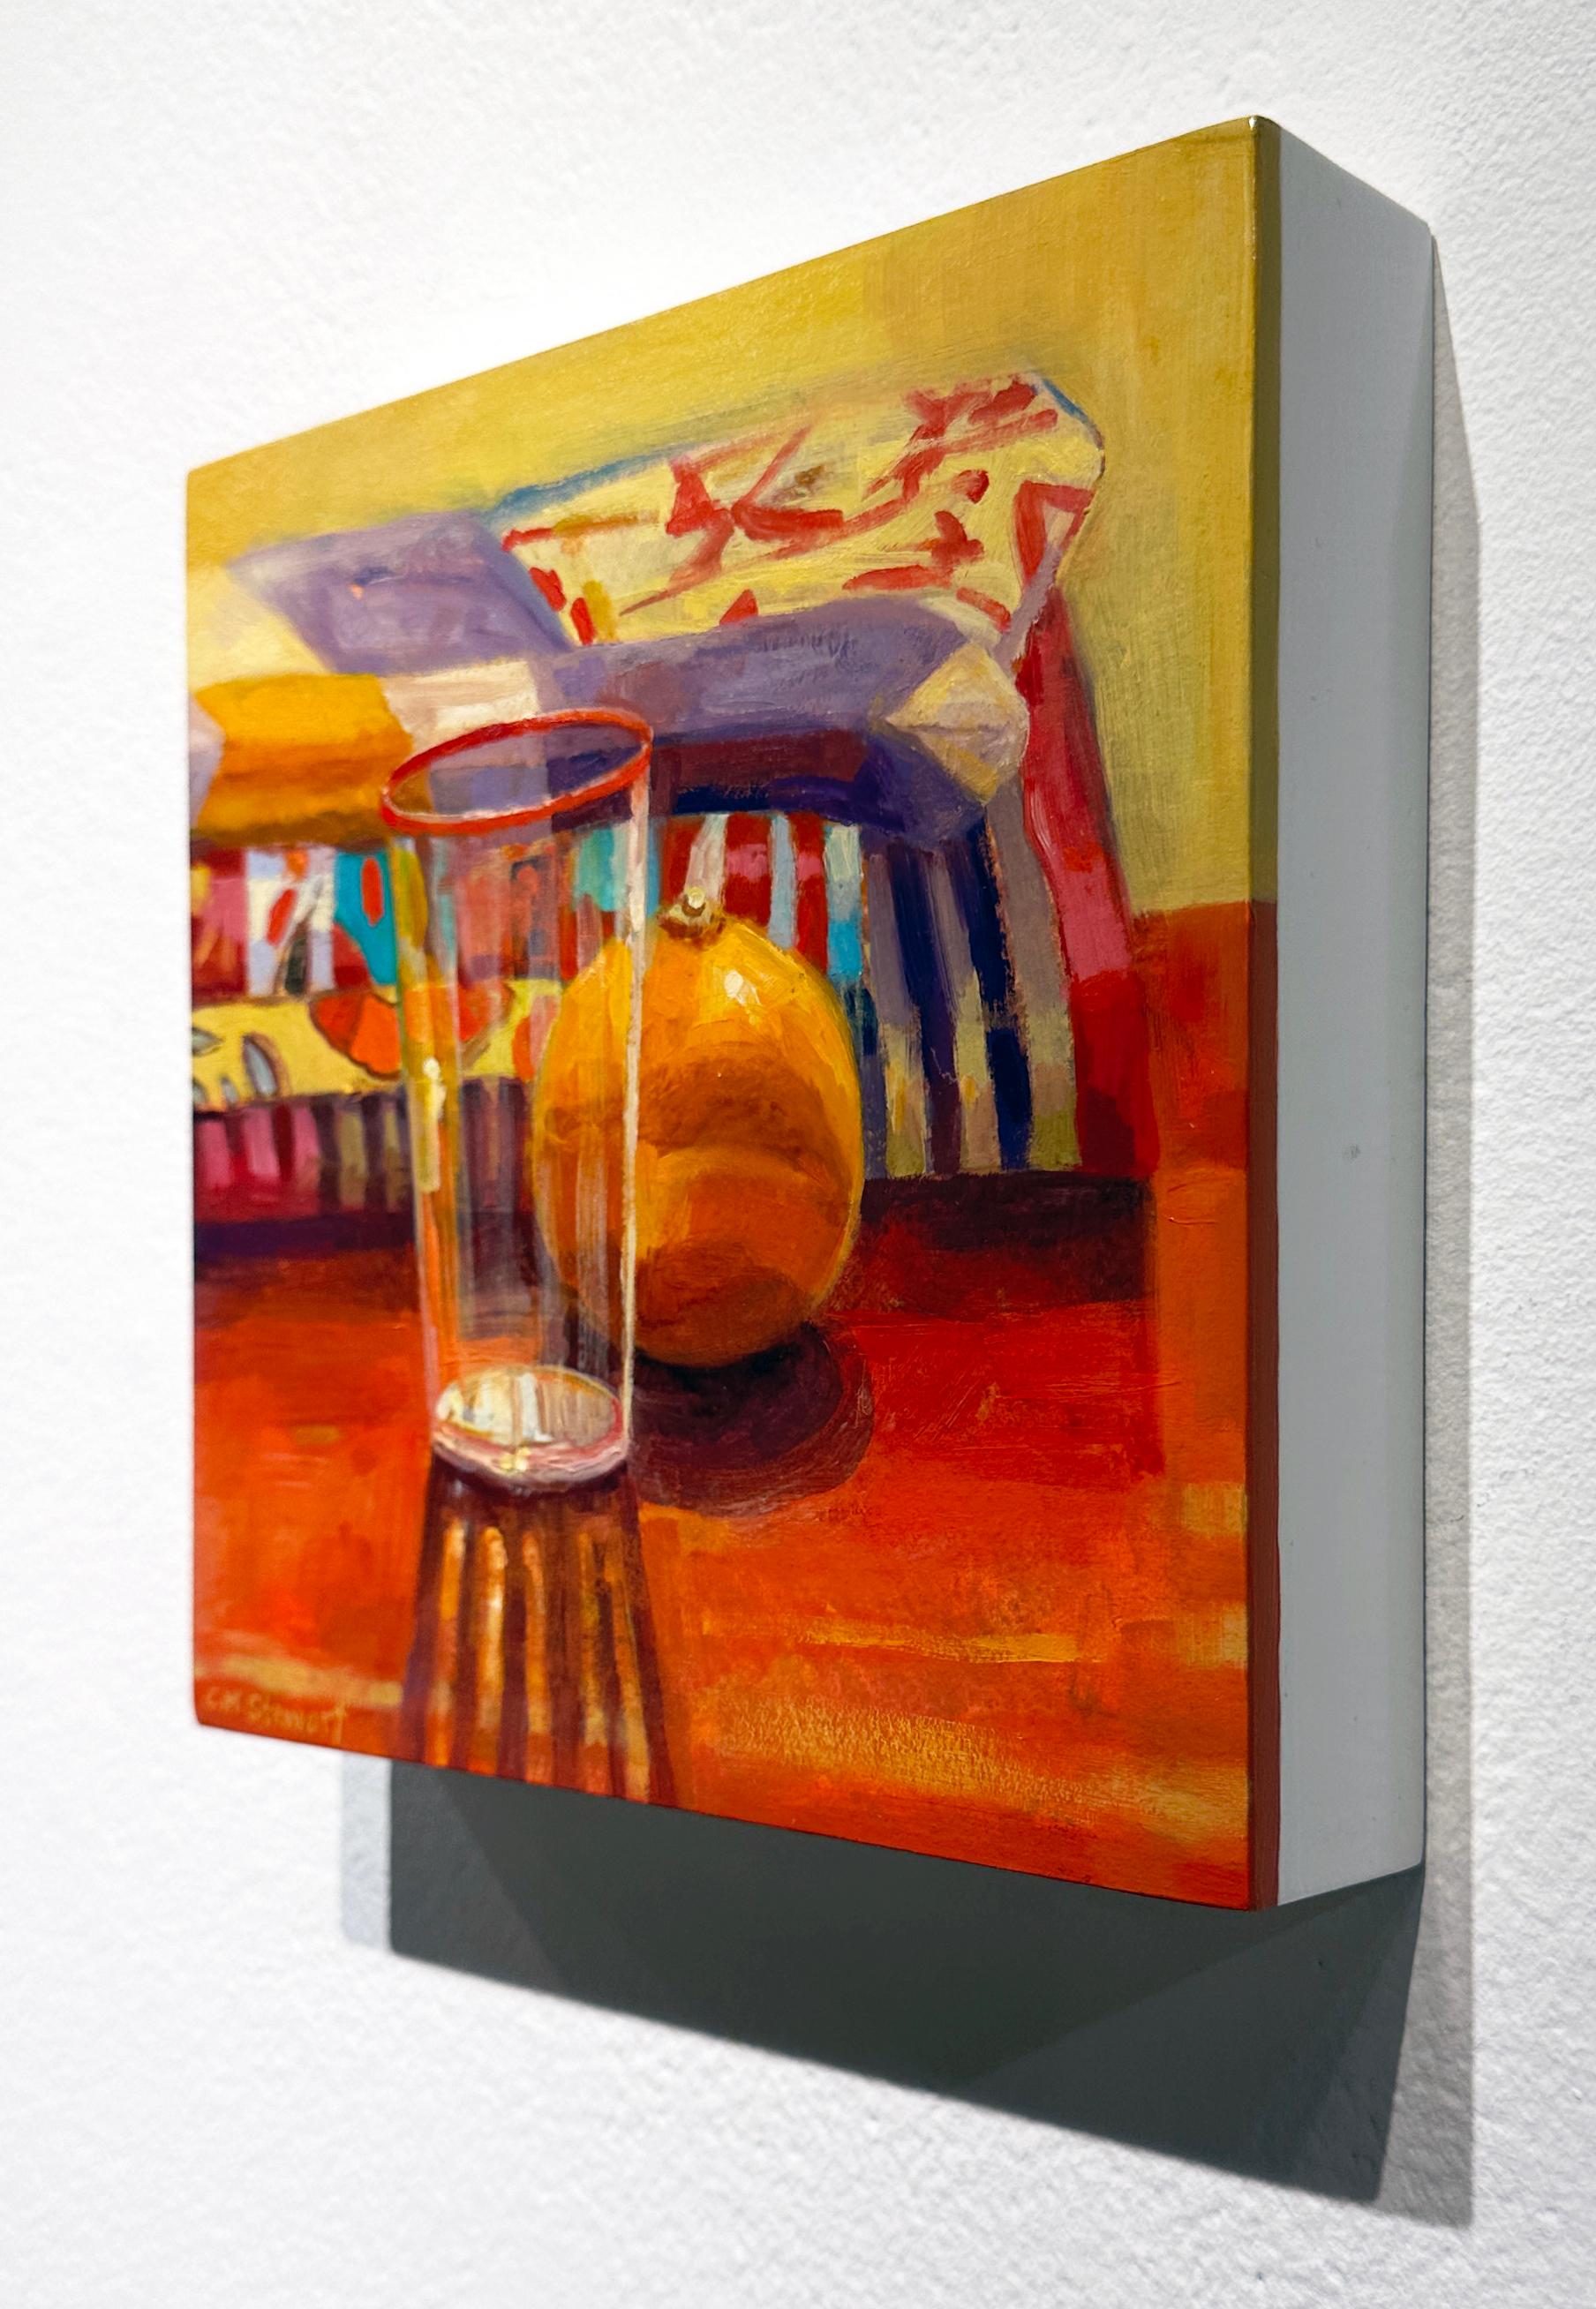 Stacked Fabric, Mandarin - Vibrant Patterns, Reflective Glass & an Orange - Impressionist Painting by Carol Stewart